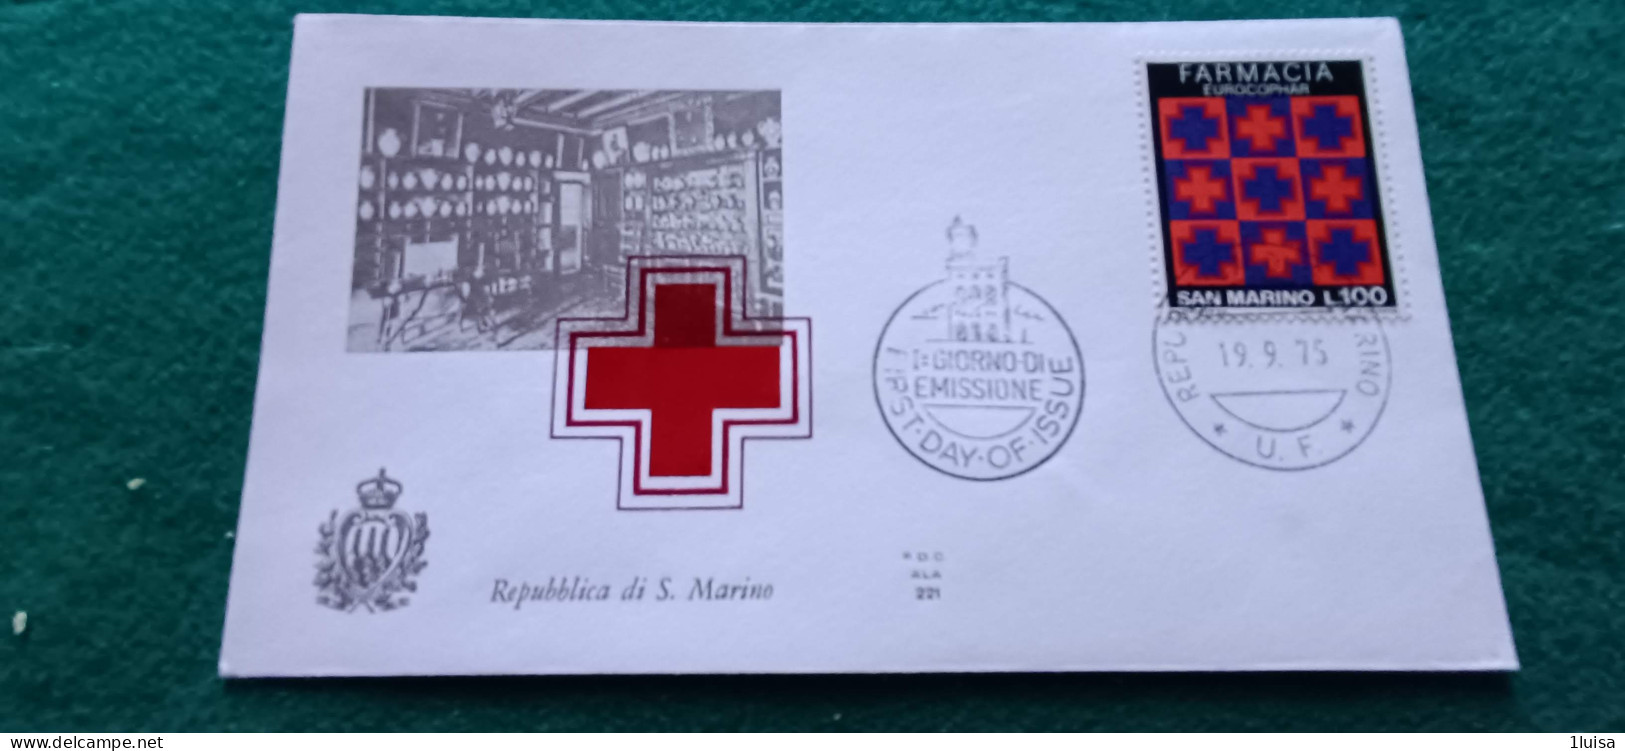 SAN MARINO 19/9/75 Croce Rossa Farmacia - Timbres Express